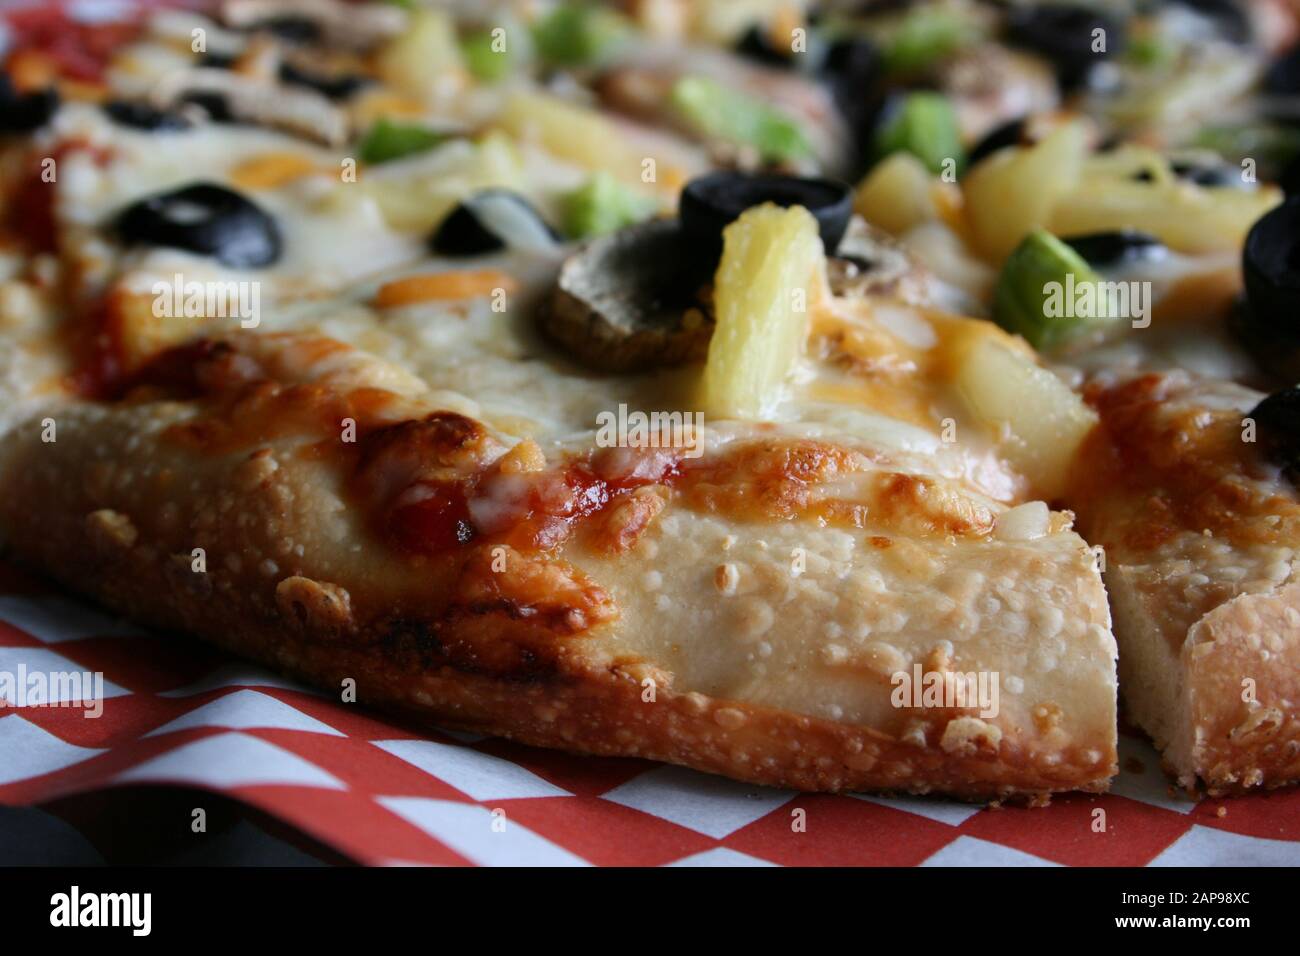 Frische Pizza mit Pfefferoni, Pilzen, Wurst, Pizza saus Mozzarella Stockfoto